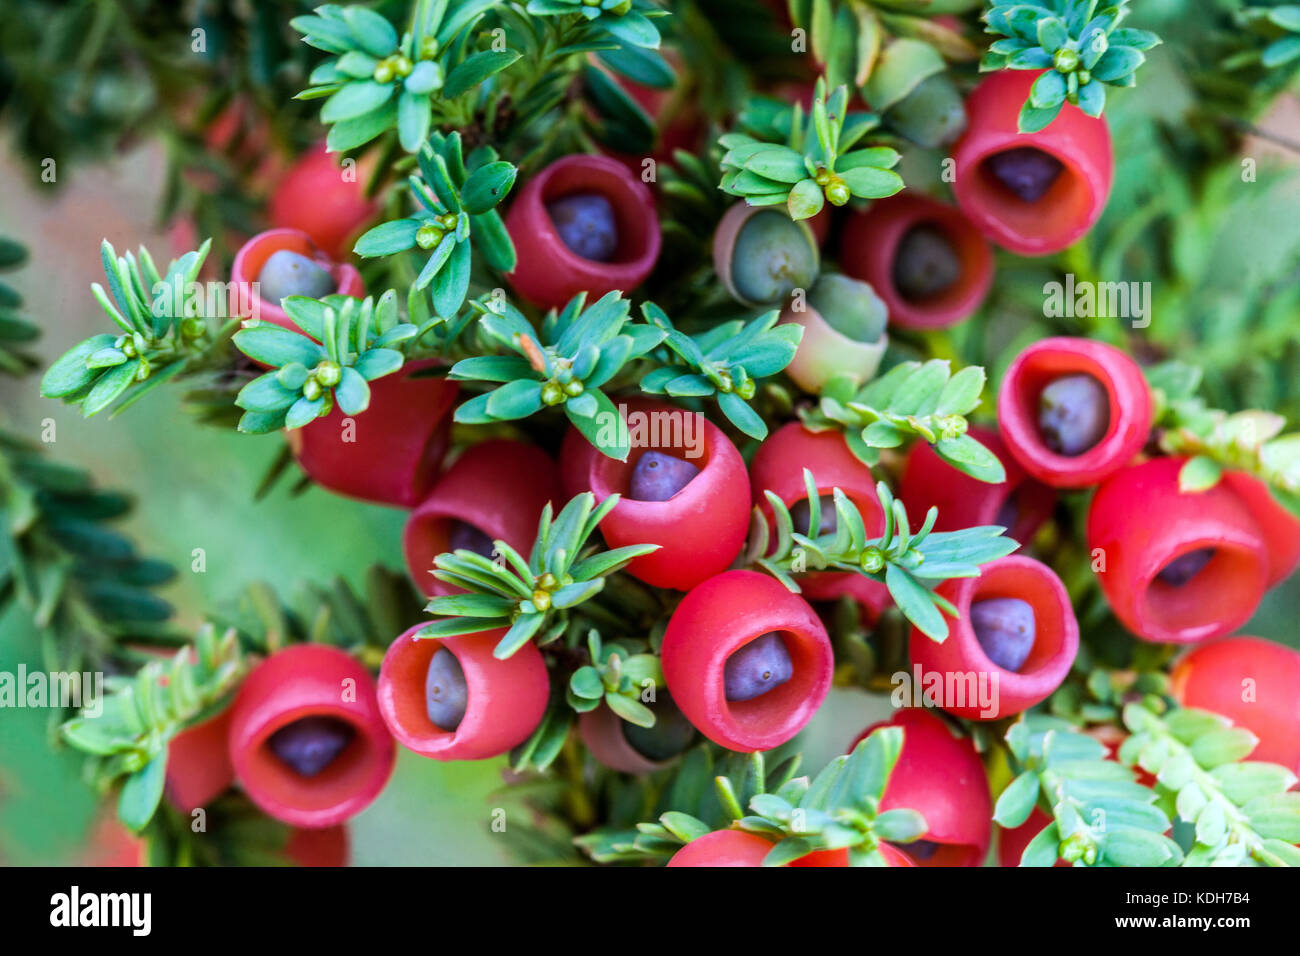 Taxus baccata ' Adpressa ', Yew cones, red berries, tiny needles cones fruits Stock Photo